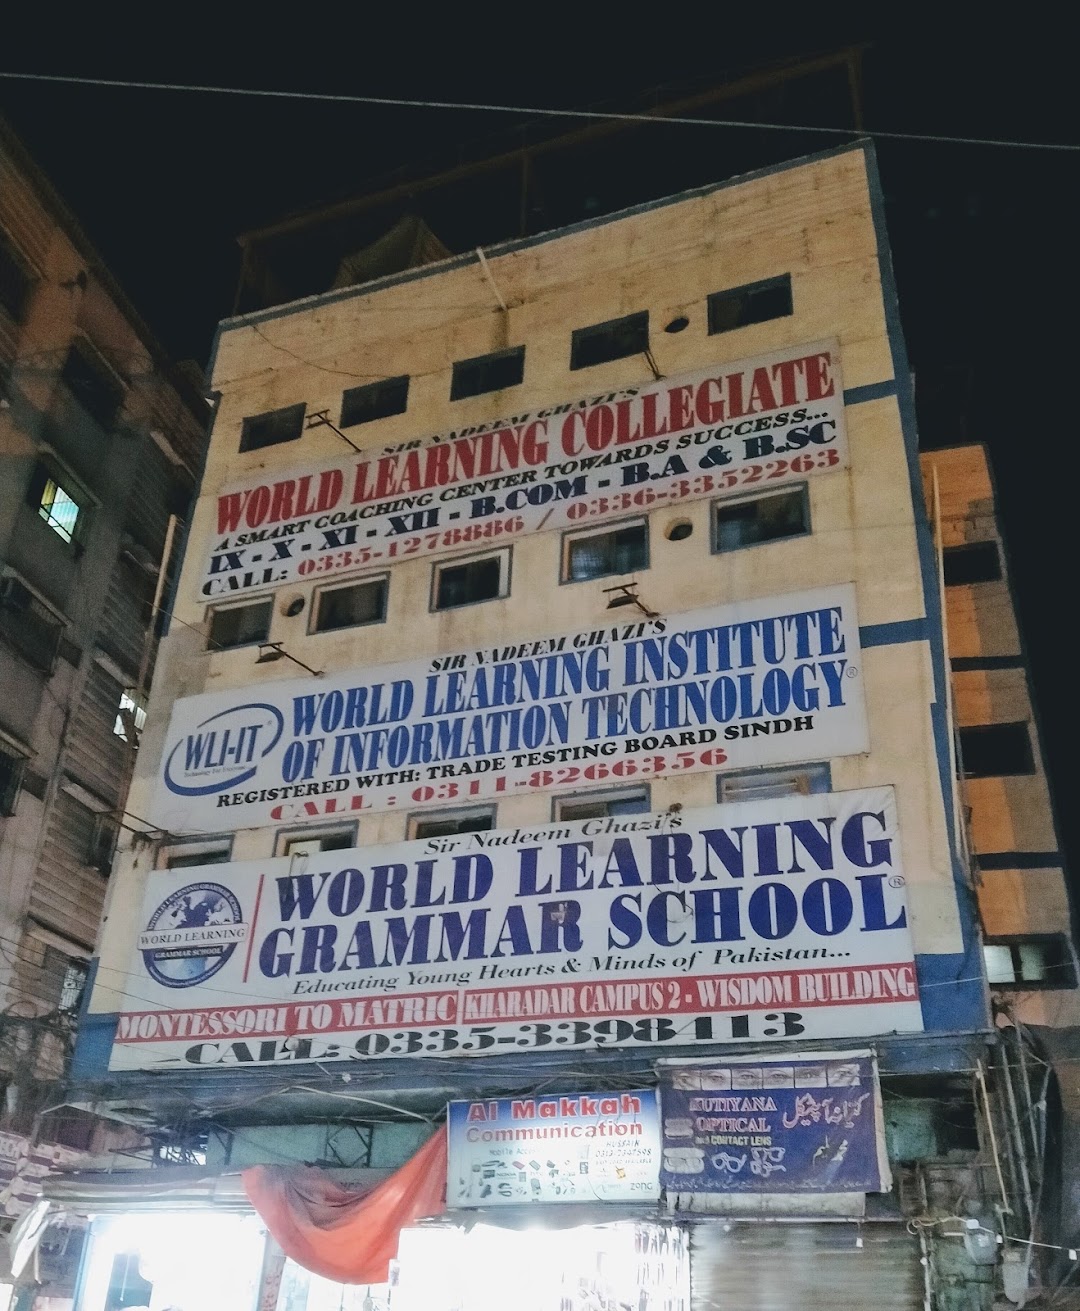 World Learning Grammar School